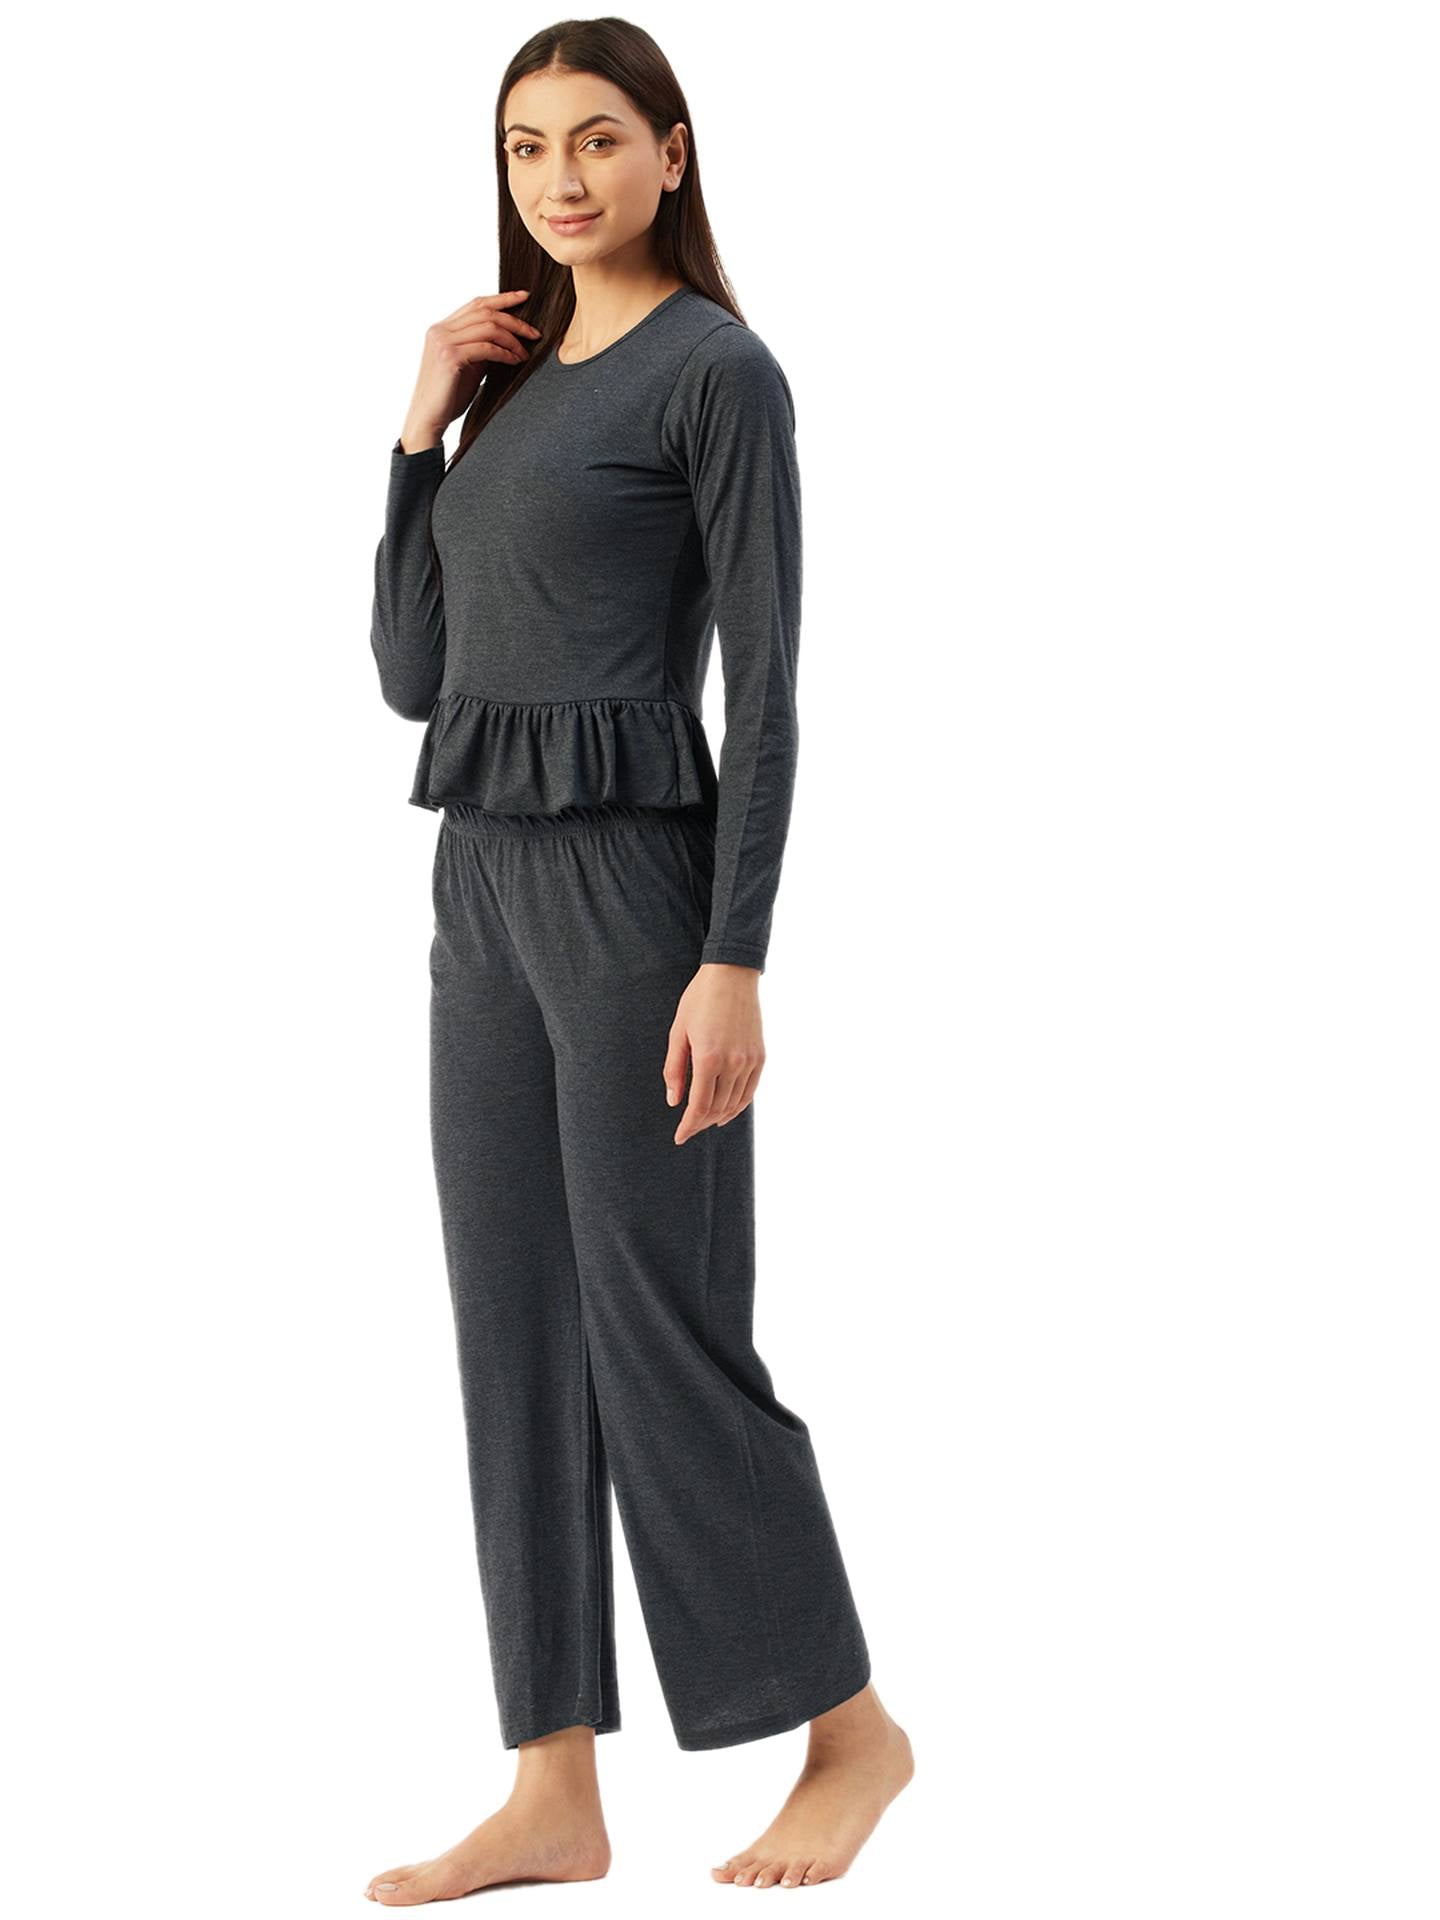 Klamotten Women's Top & Pyjama Nightsuit N106Zd